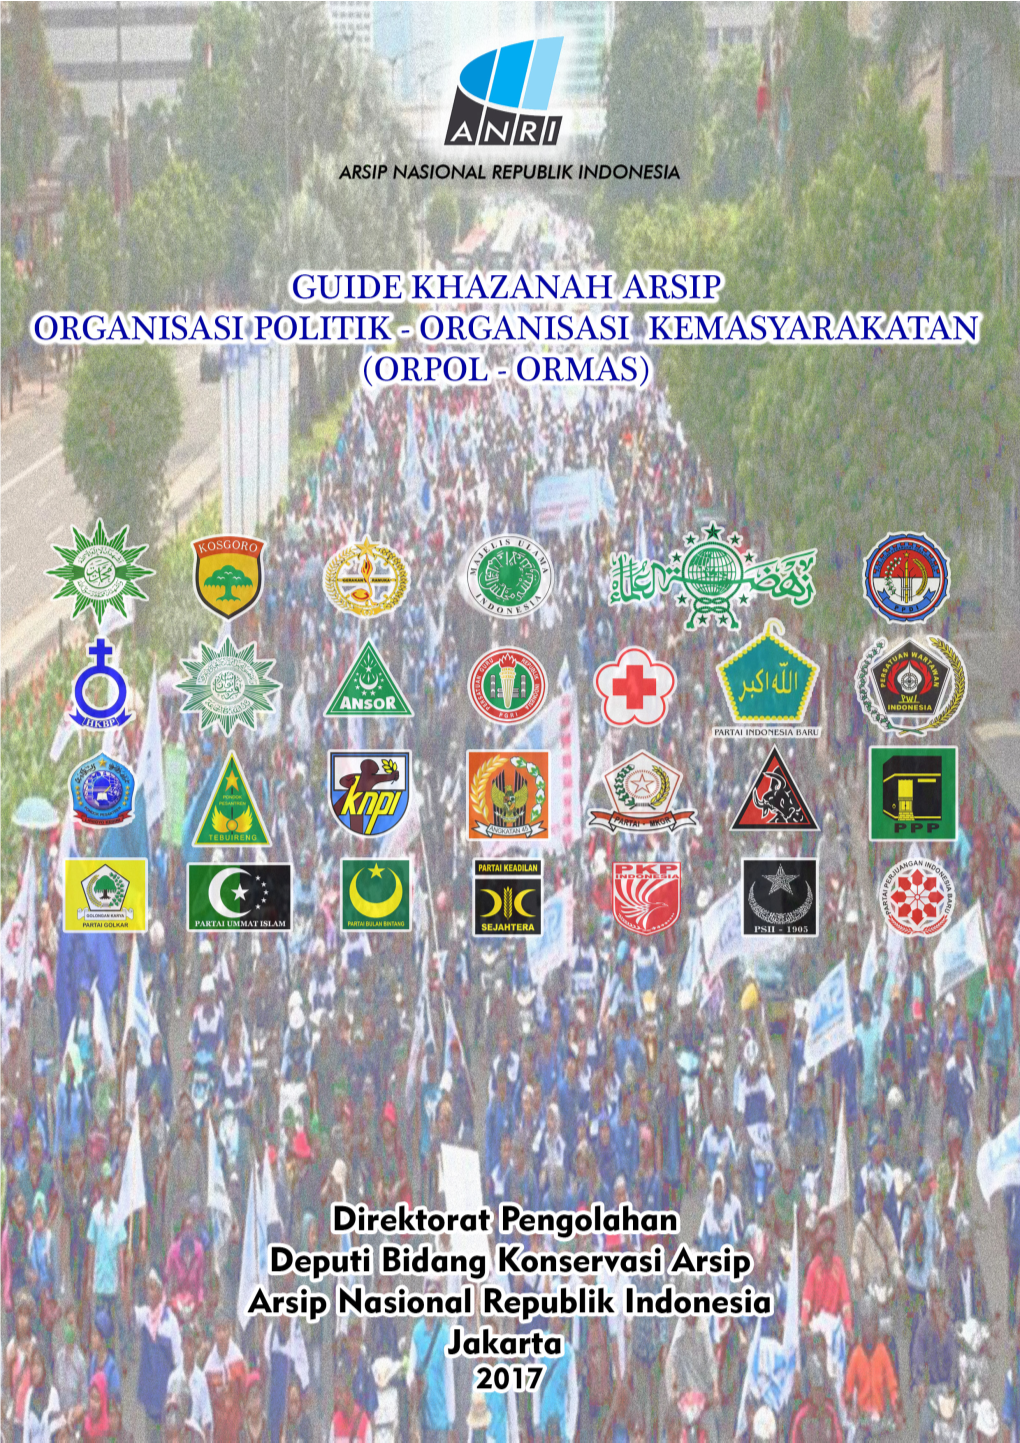 Guide Khazanah Arsip Organisasi Politik - Organisasi Kemasyarakatan (Orpol - Ormas)